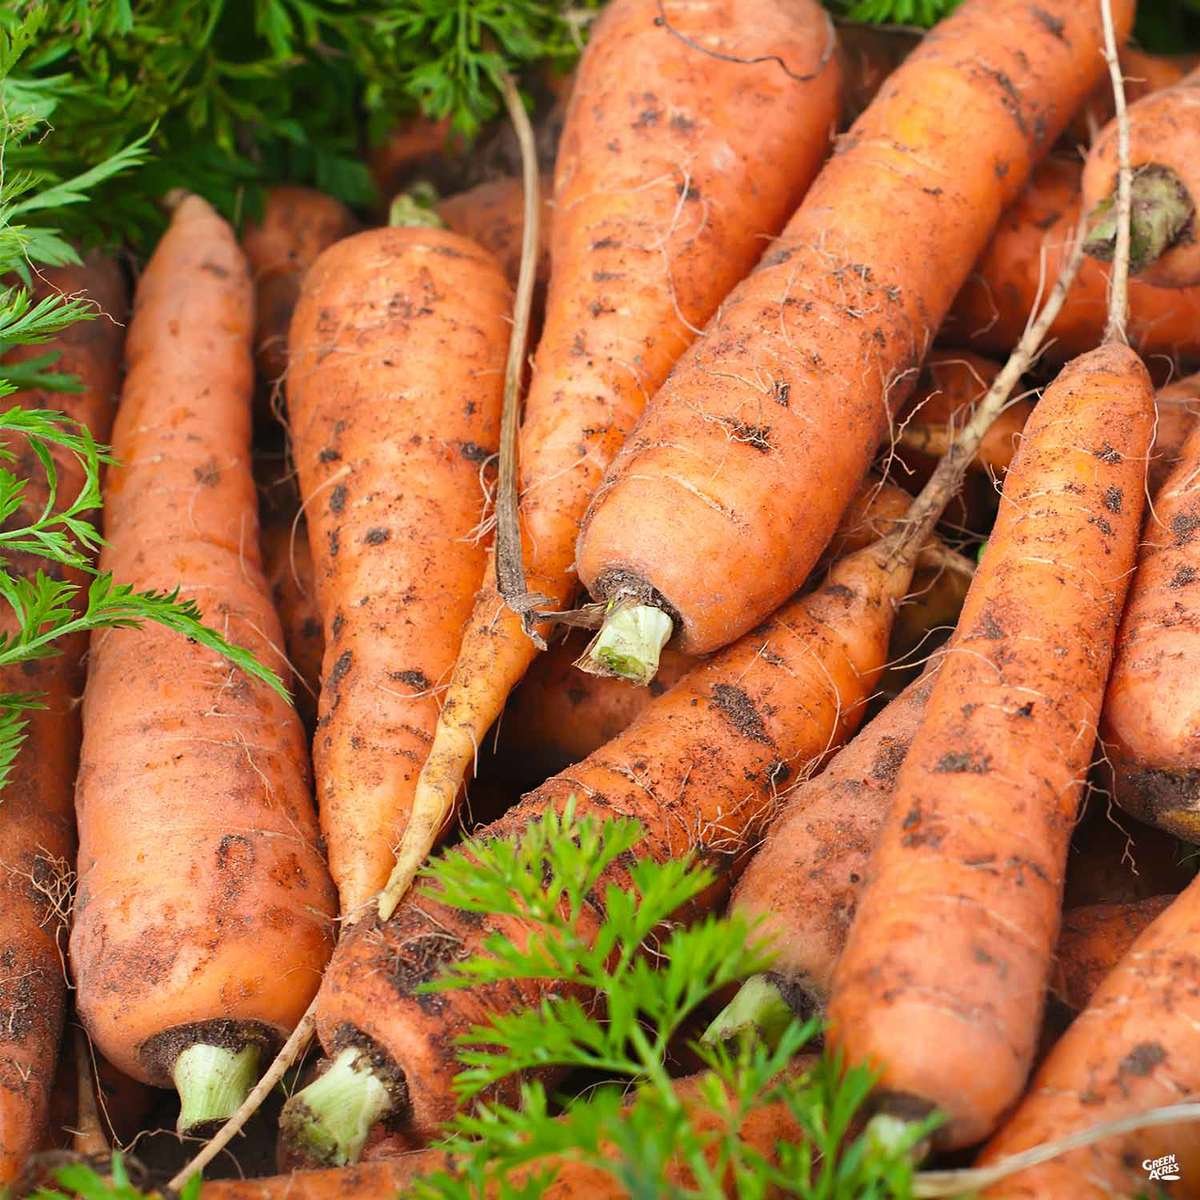 Freshly-picked carrots